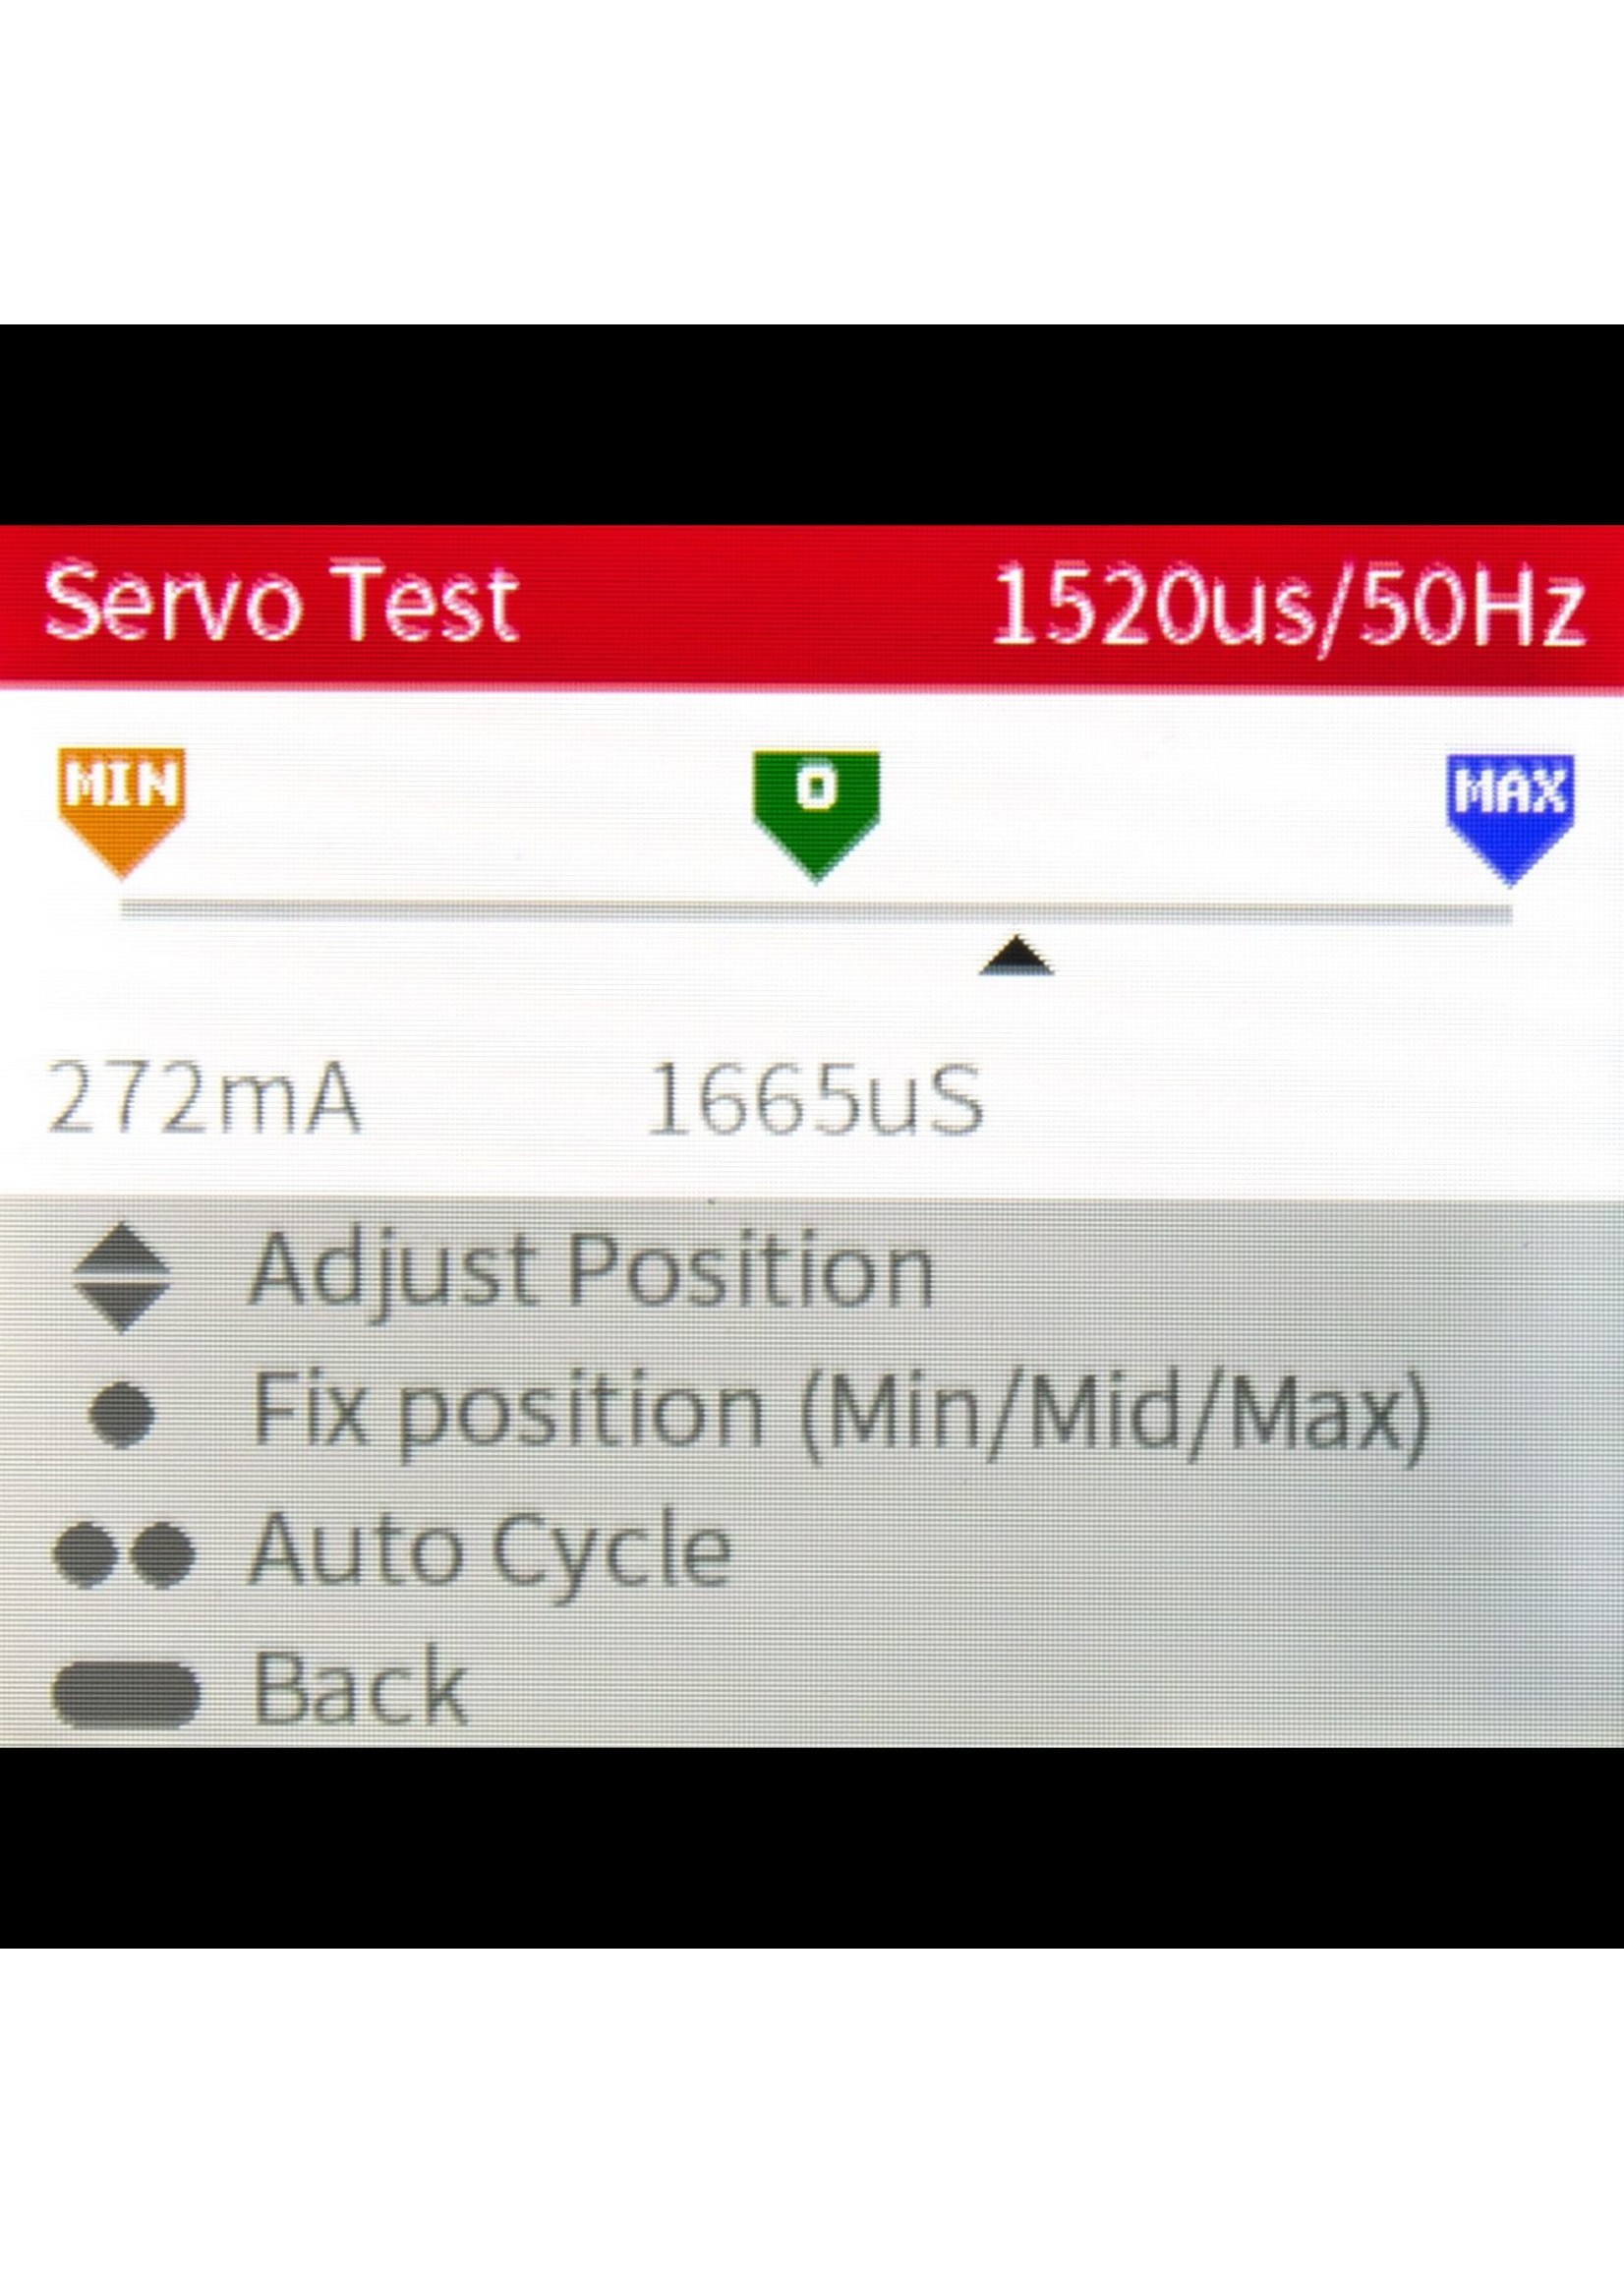 Spektrum XBC100 - Smart Battery Checker & Servo Driver